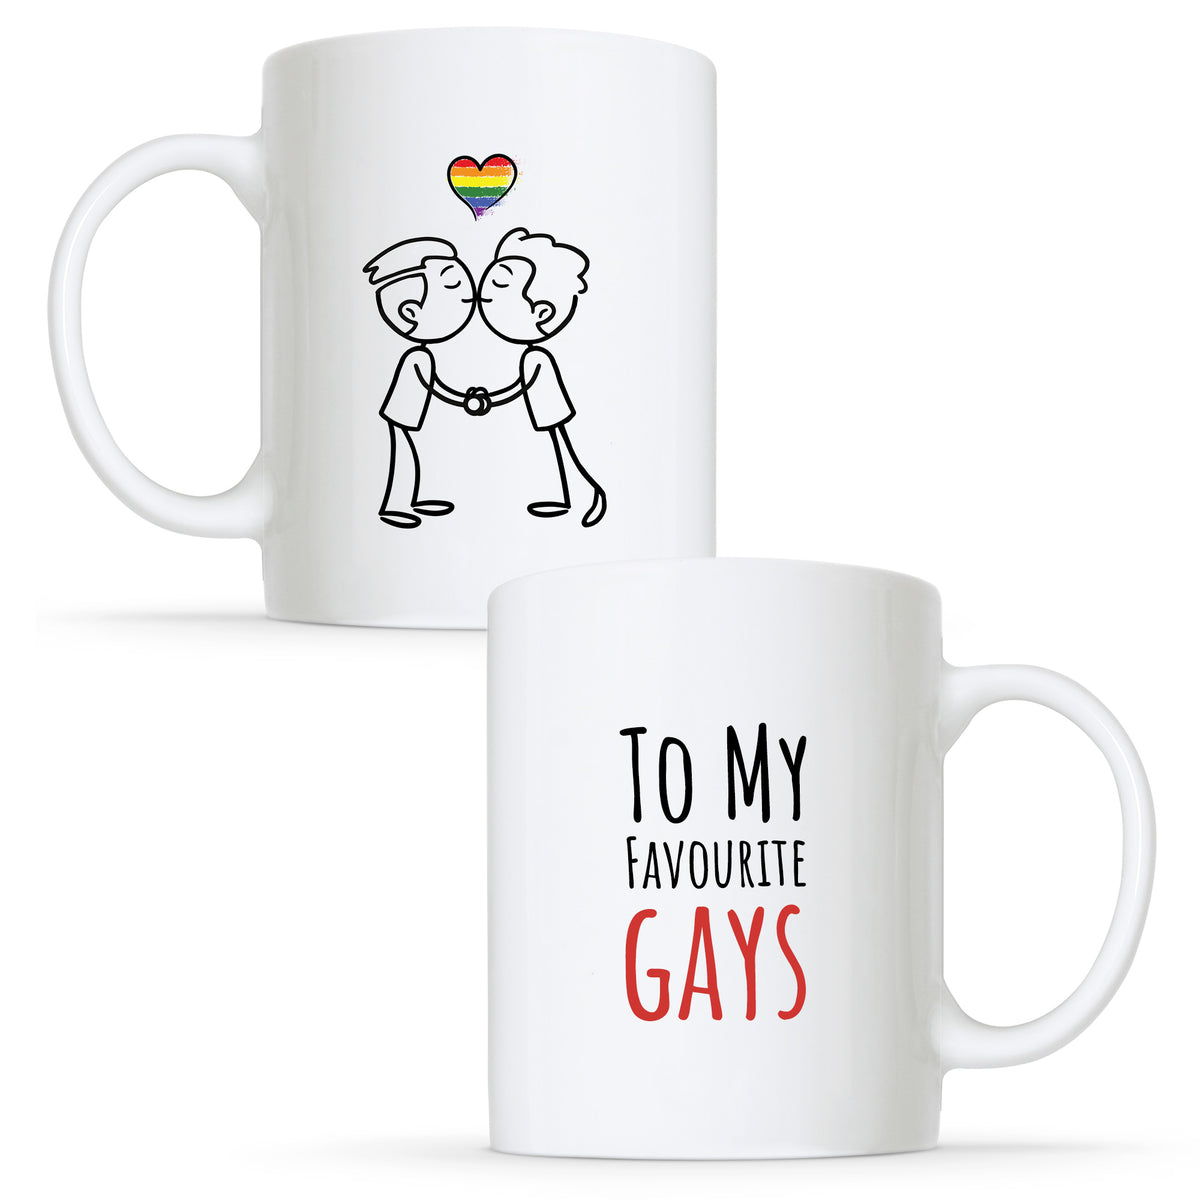 To my Favourite Gays - Gay Couple Mug Set | Gift